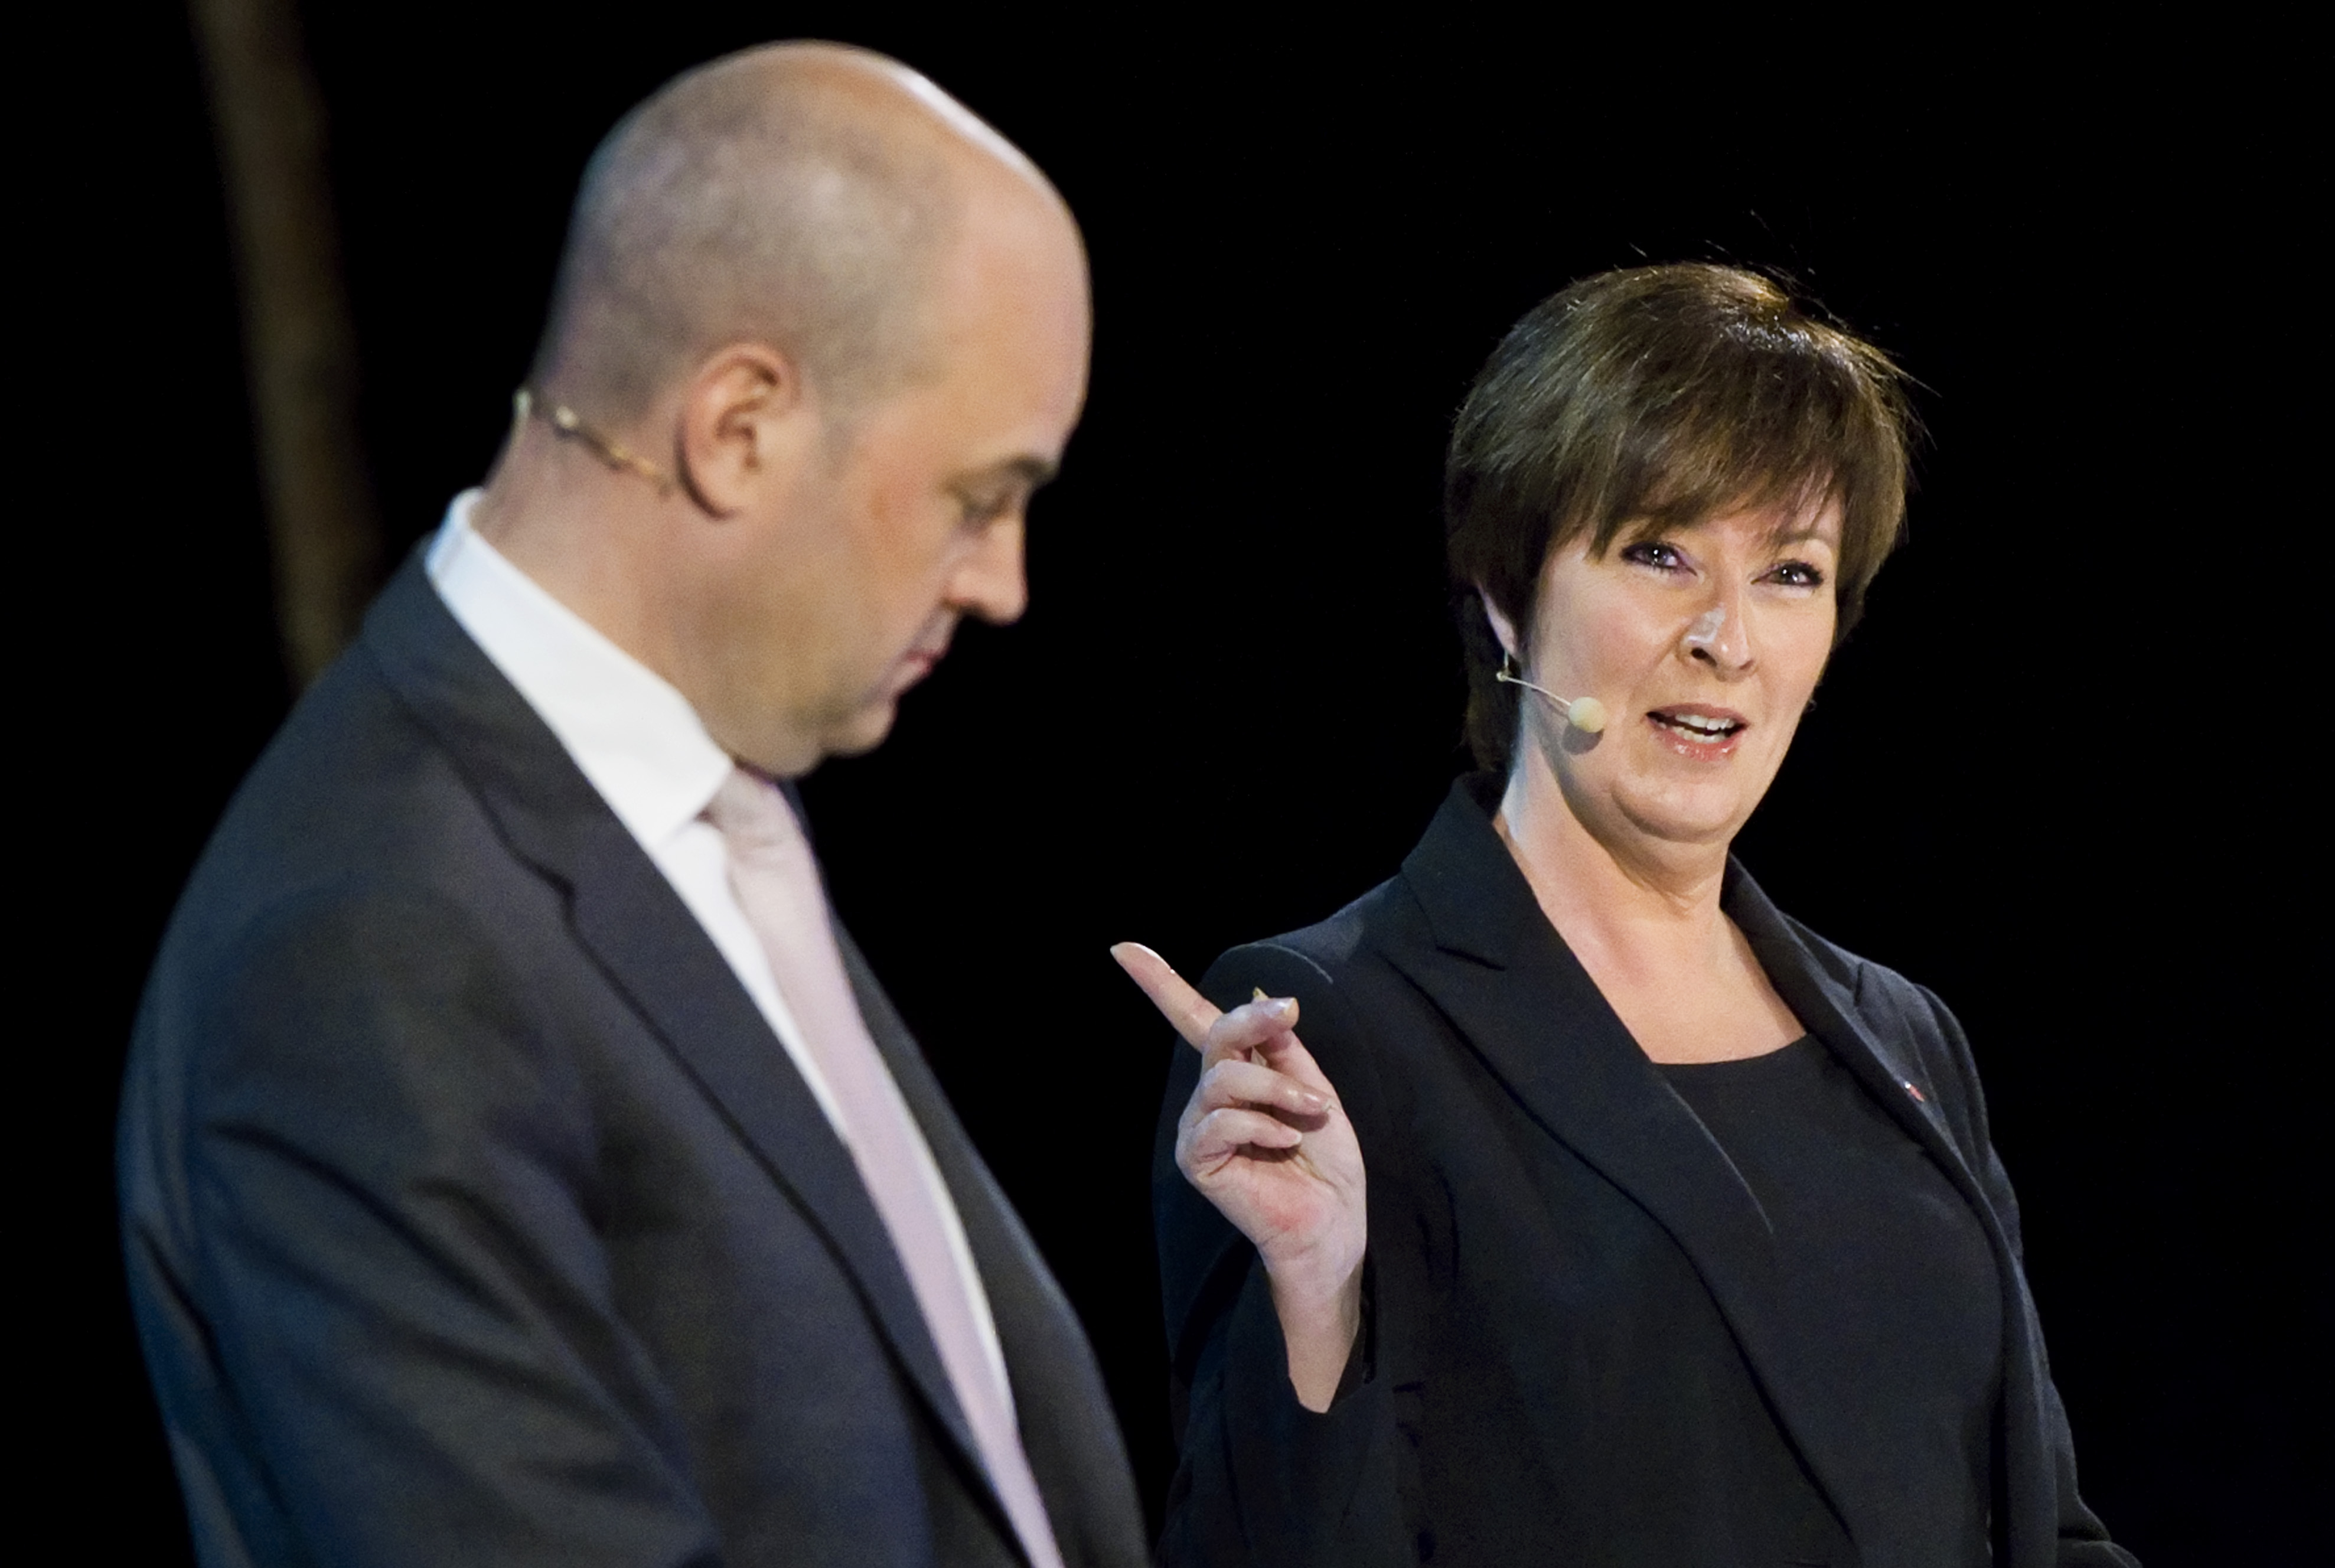 Partiledardebatt, Fredrik Reinfeldt, Riksdagsvalet 2010, Mona Sahlin